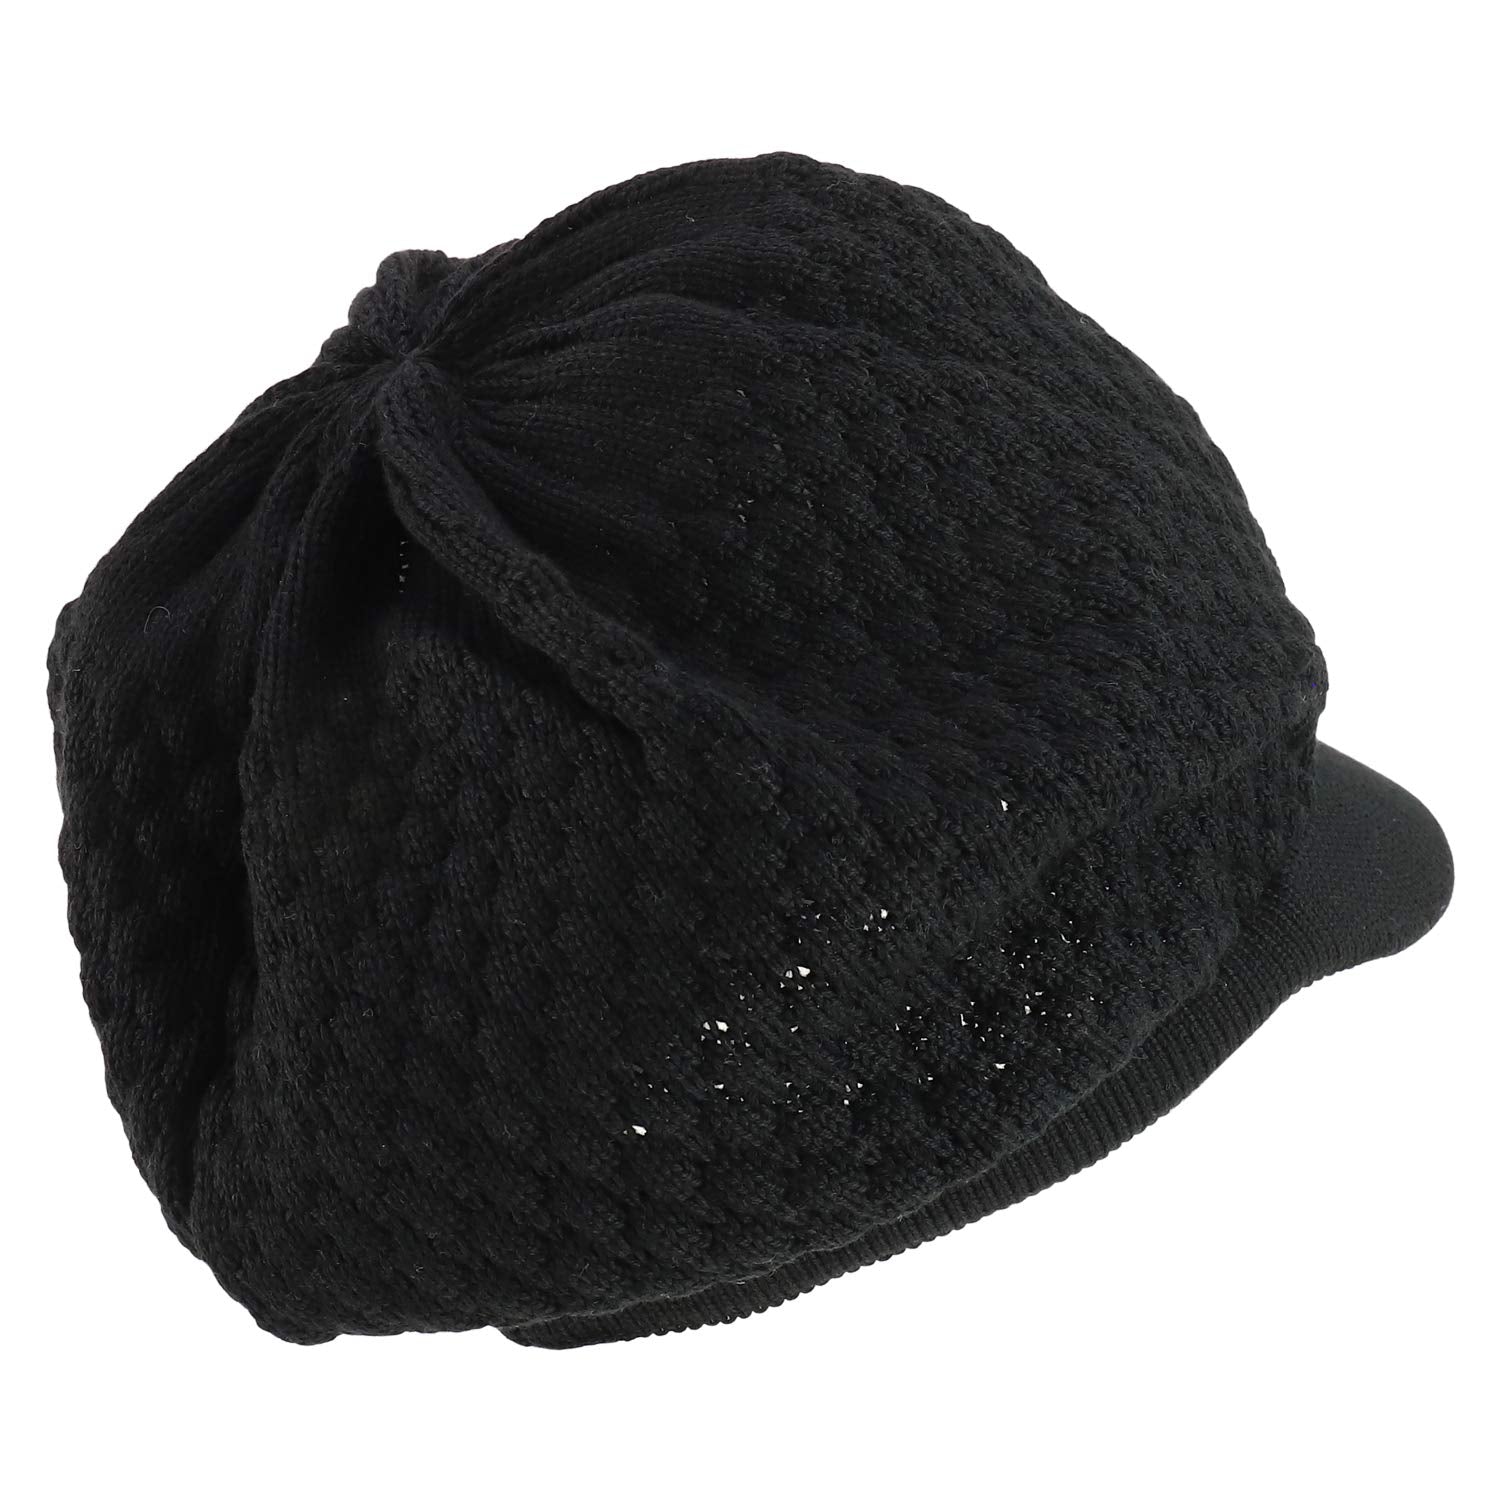 Armycrew Rastafarian Dreadlock Knit Oversized Slouch Cotton Visored Beanie - Black